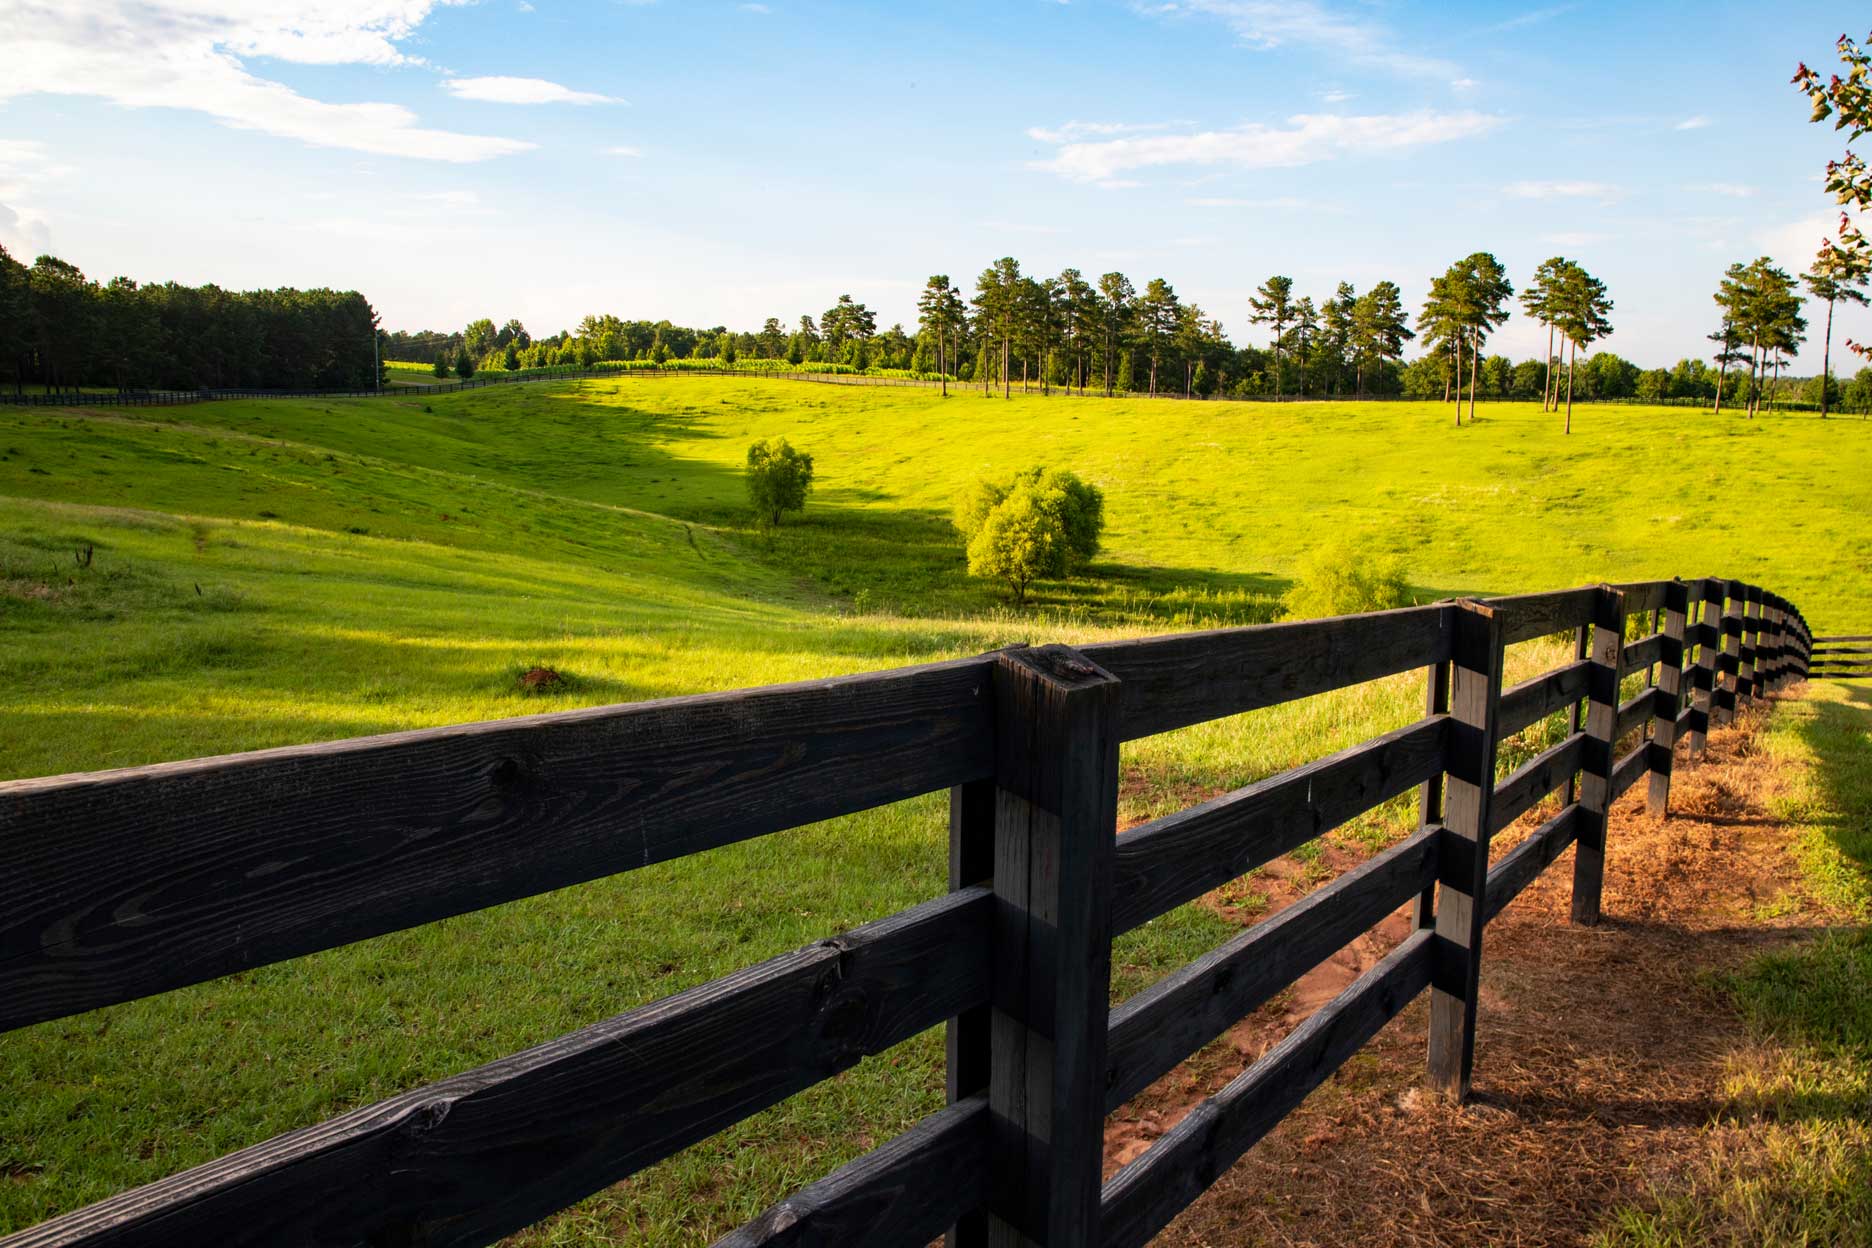 A fence stretching through a field